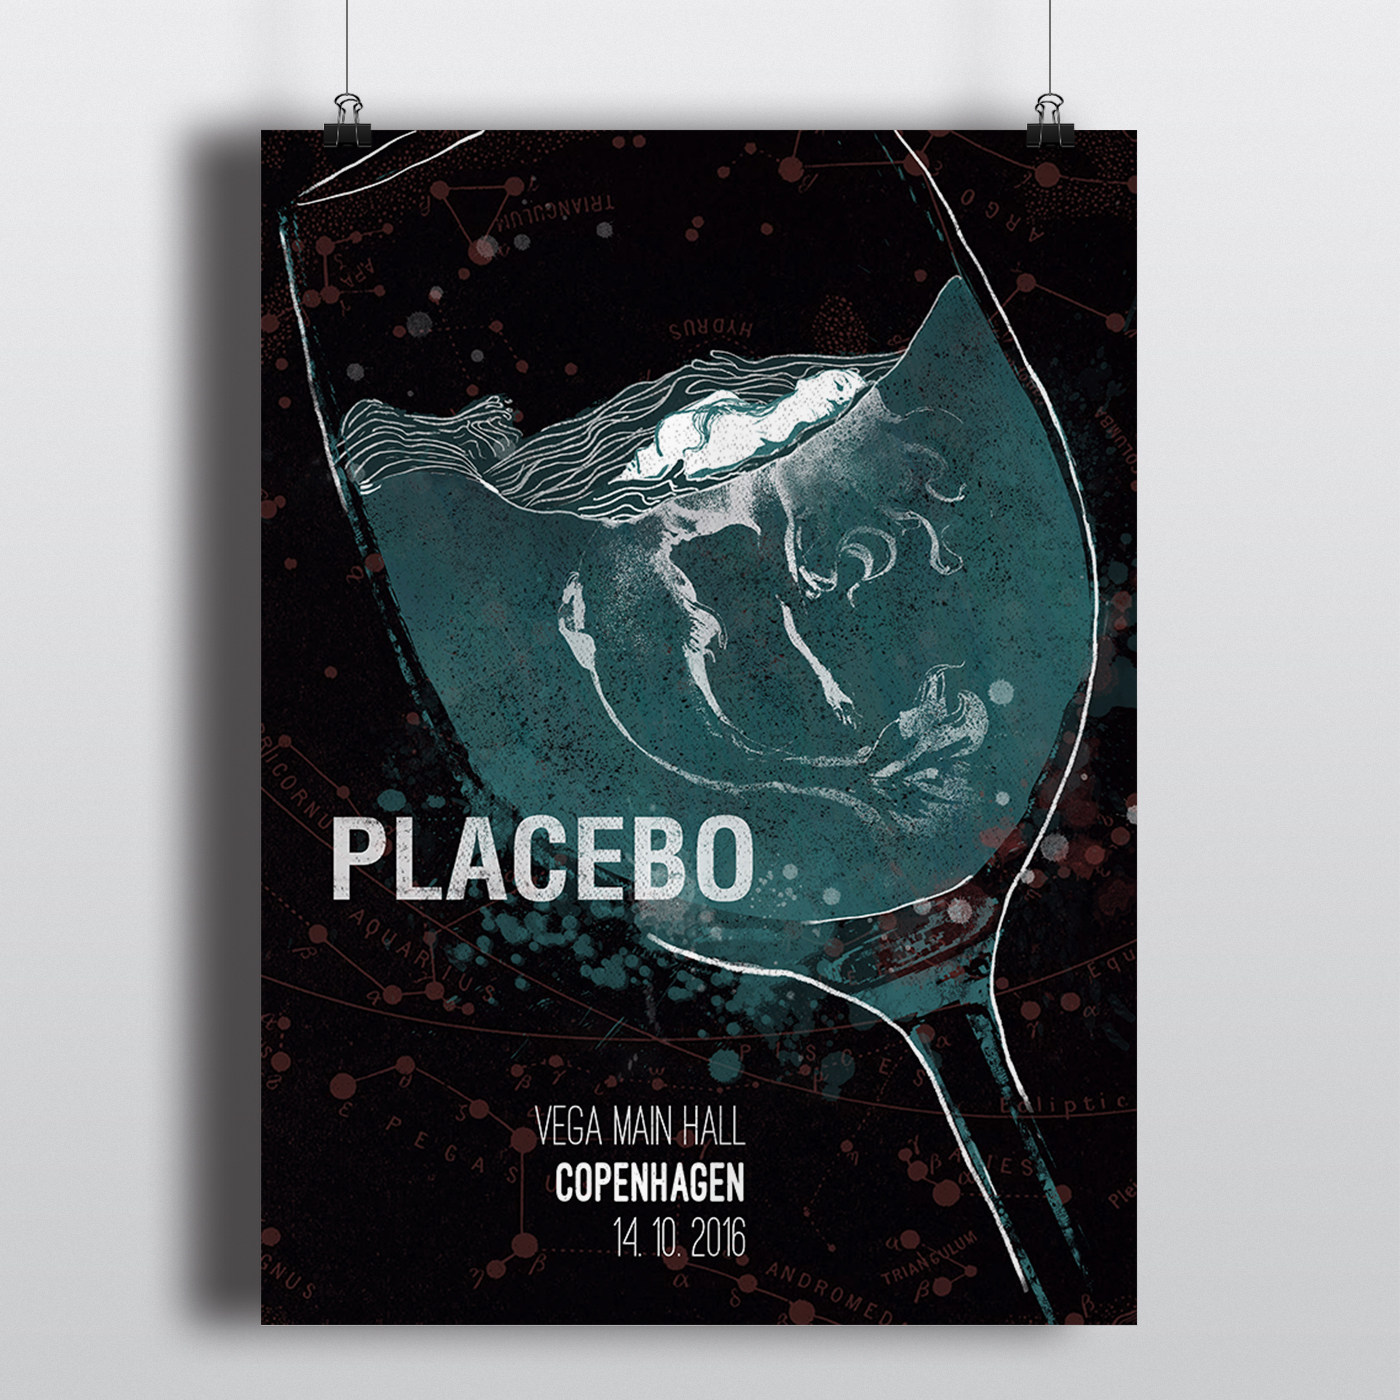 Placebo music poster